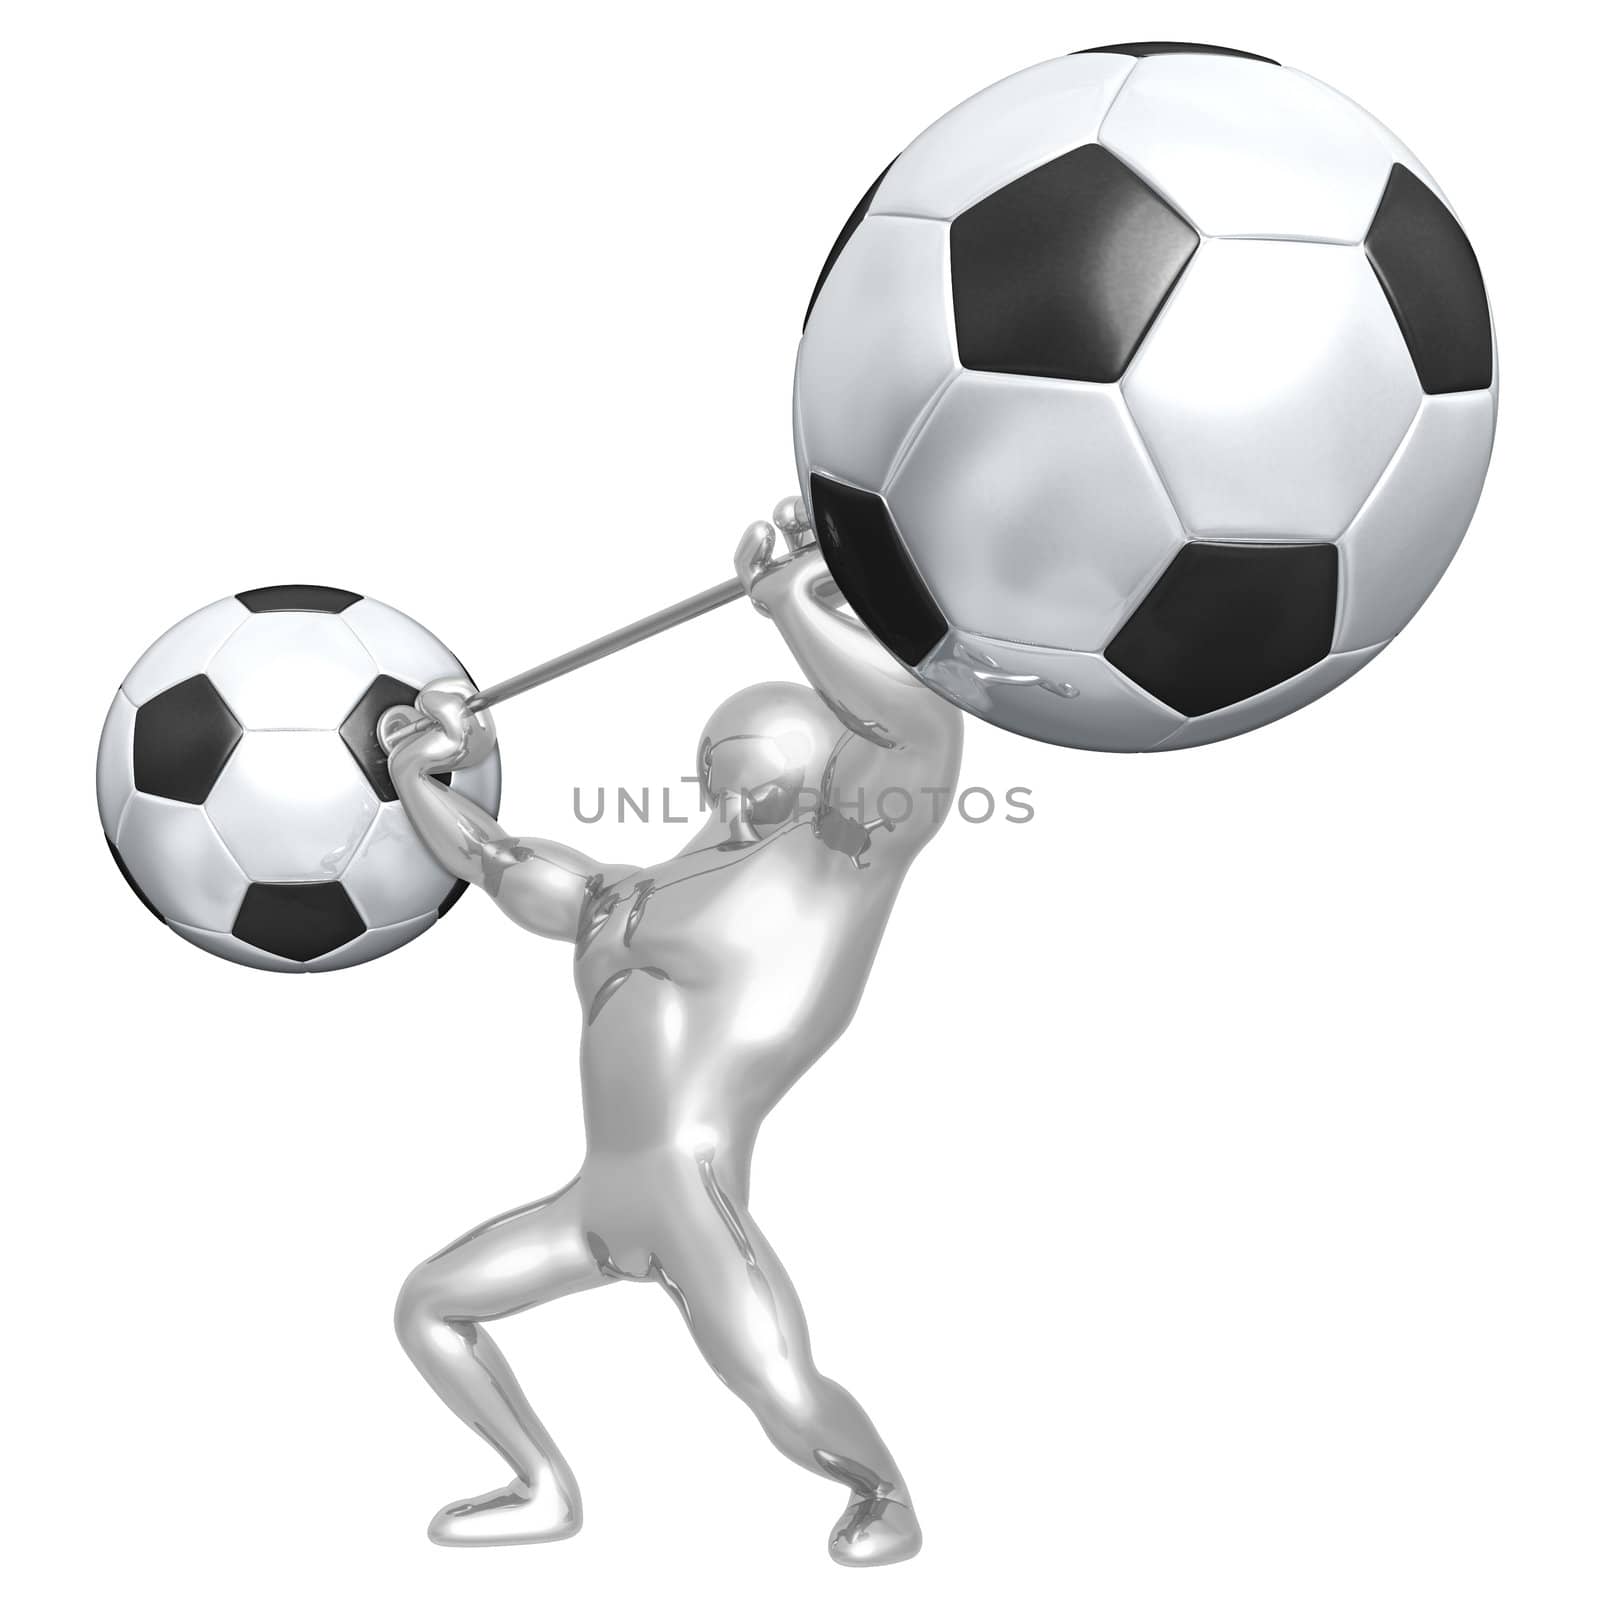 Soccer Football Weight Training by LuMaxArt